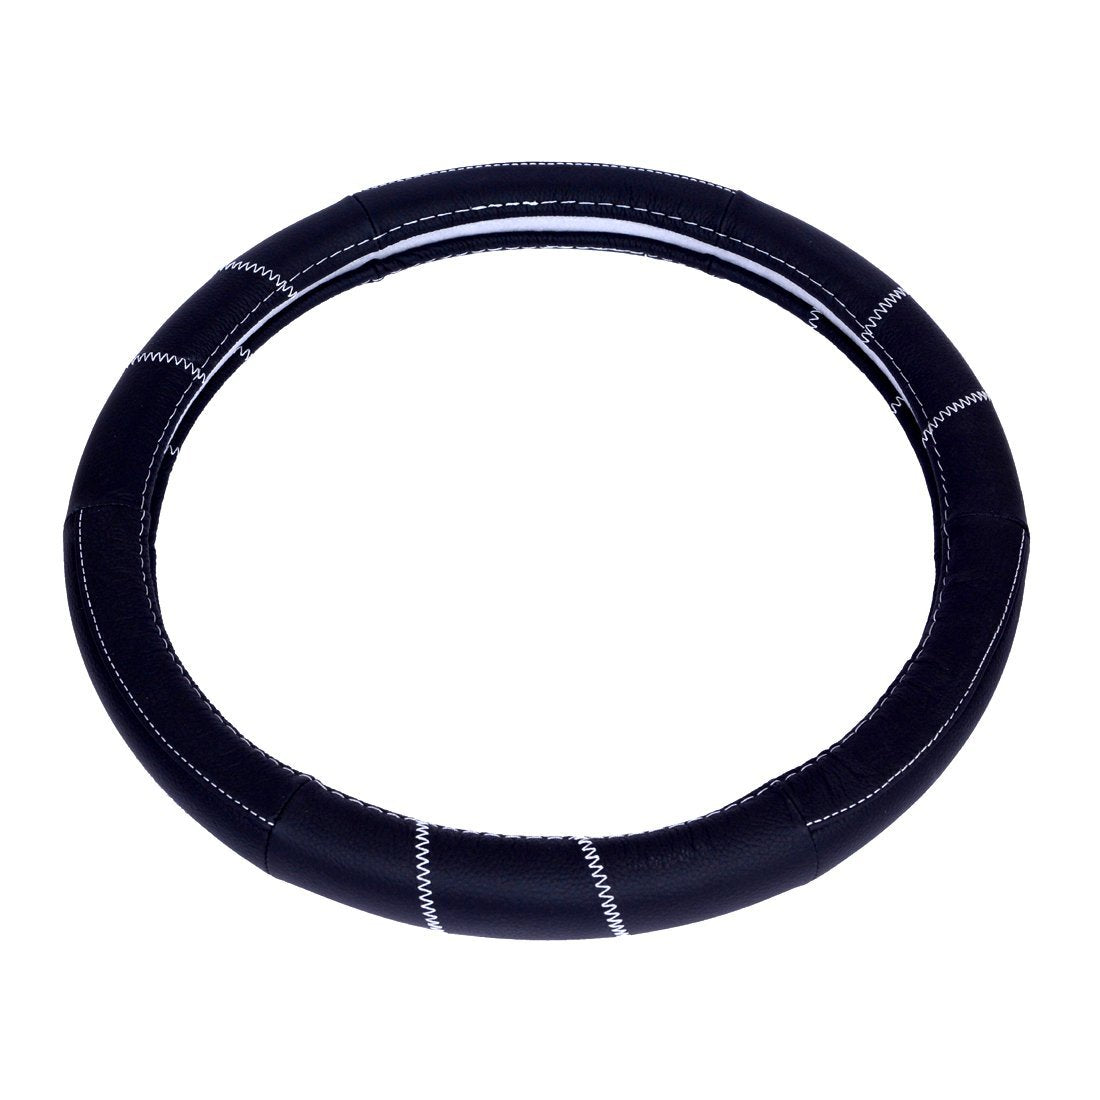 Oshotto SC-006 Leather Car Steering Cover (Black,Medium)